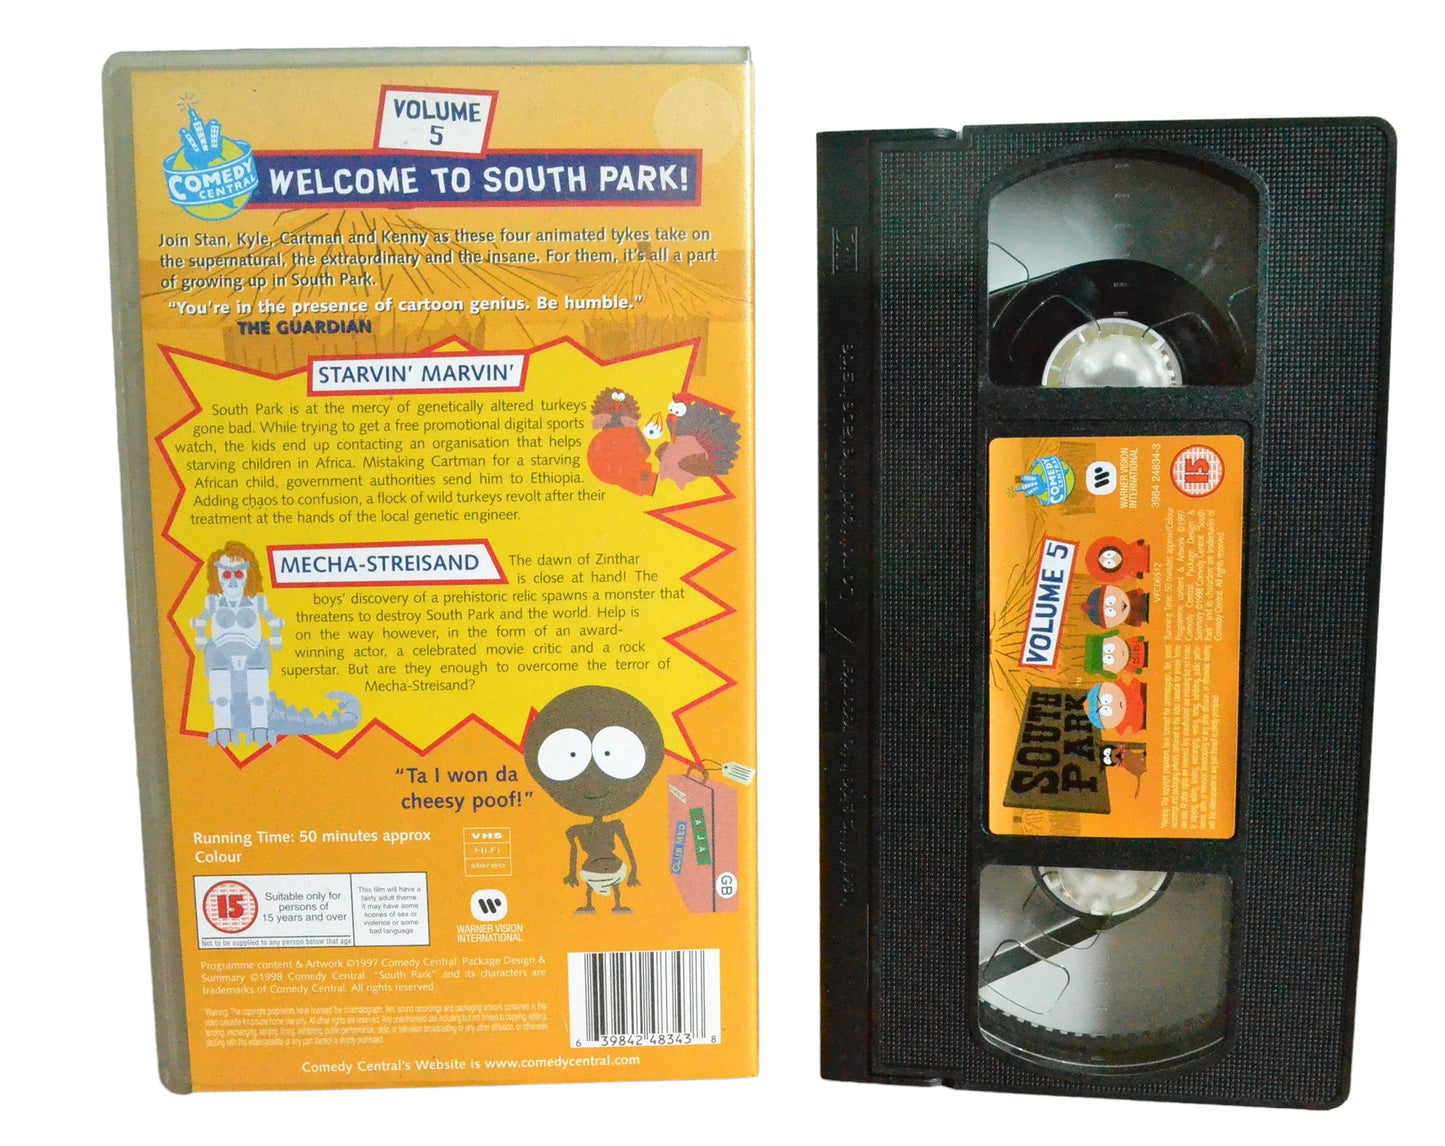 South Park : Volume 1 (Starvin' Marvin' Mecha / Streisand) - Warner Vision Entertainment - 3984248343 - Comedy - Pal - VHS-